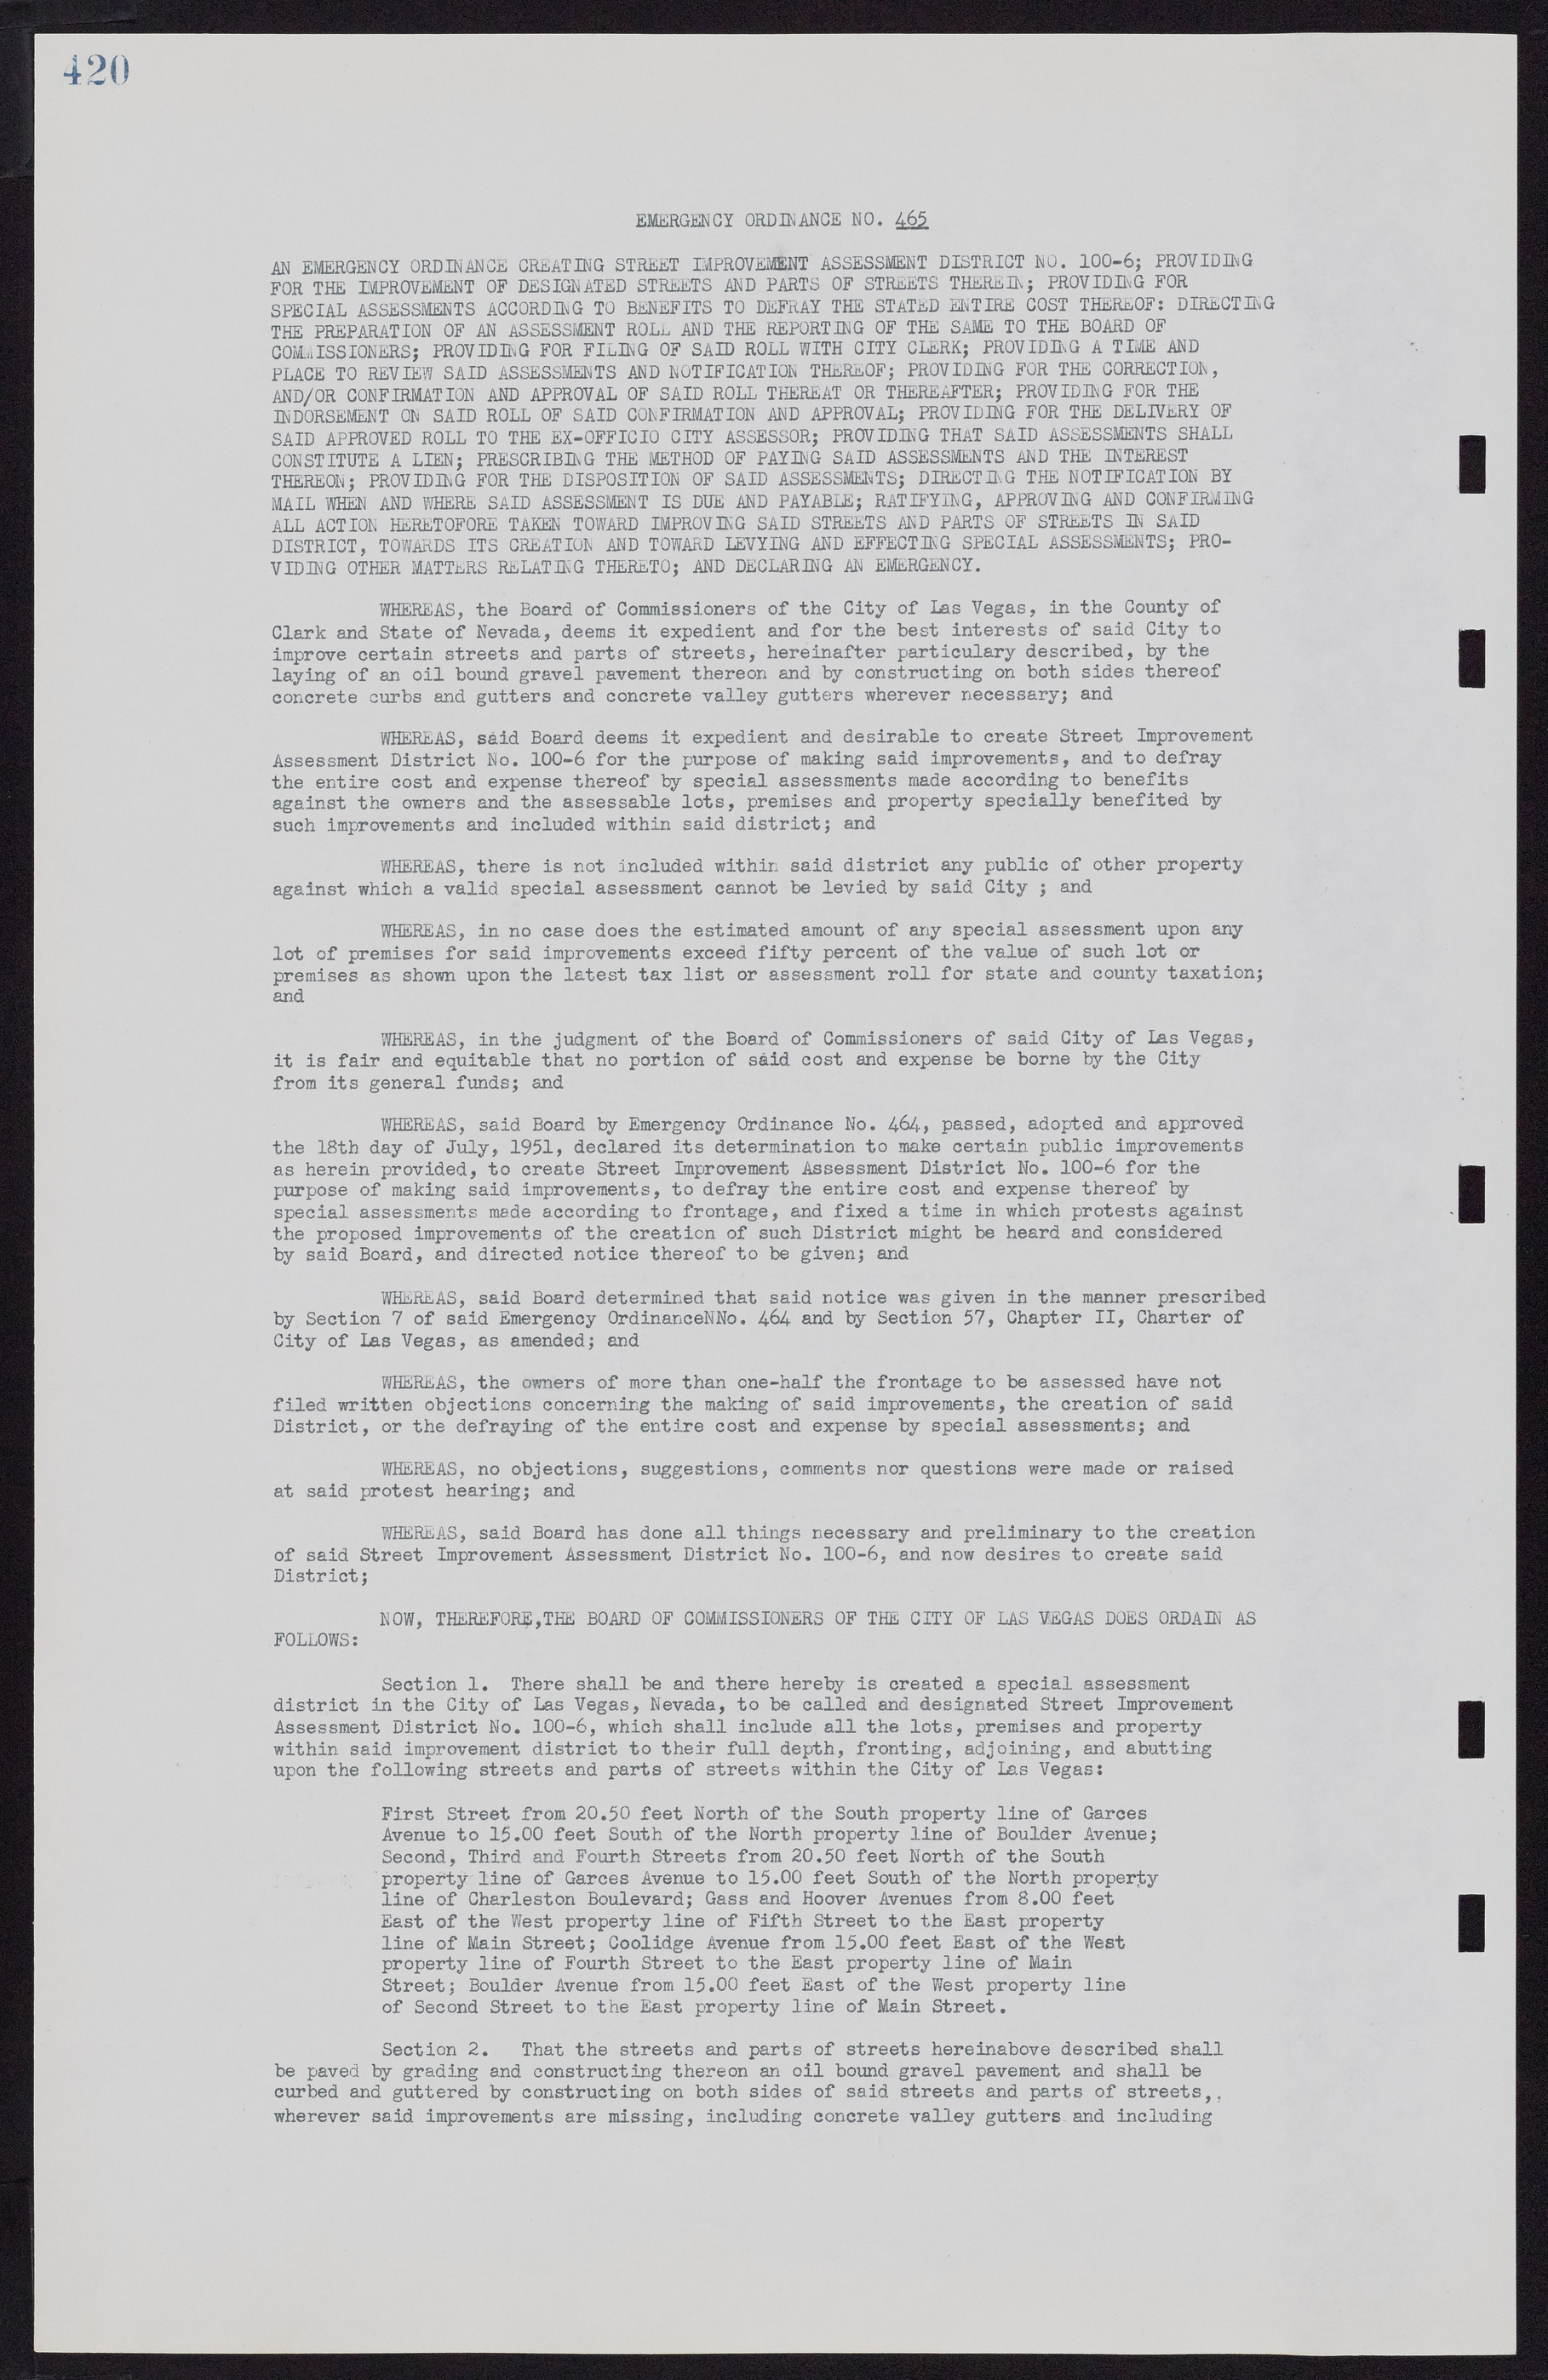 Las Vegas City Commission Minutes, November 7, 1949 to May 21, 1952, lvc000007-436